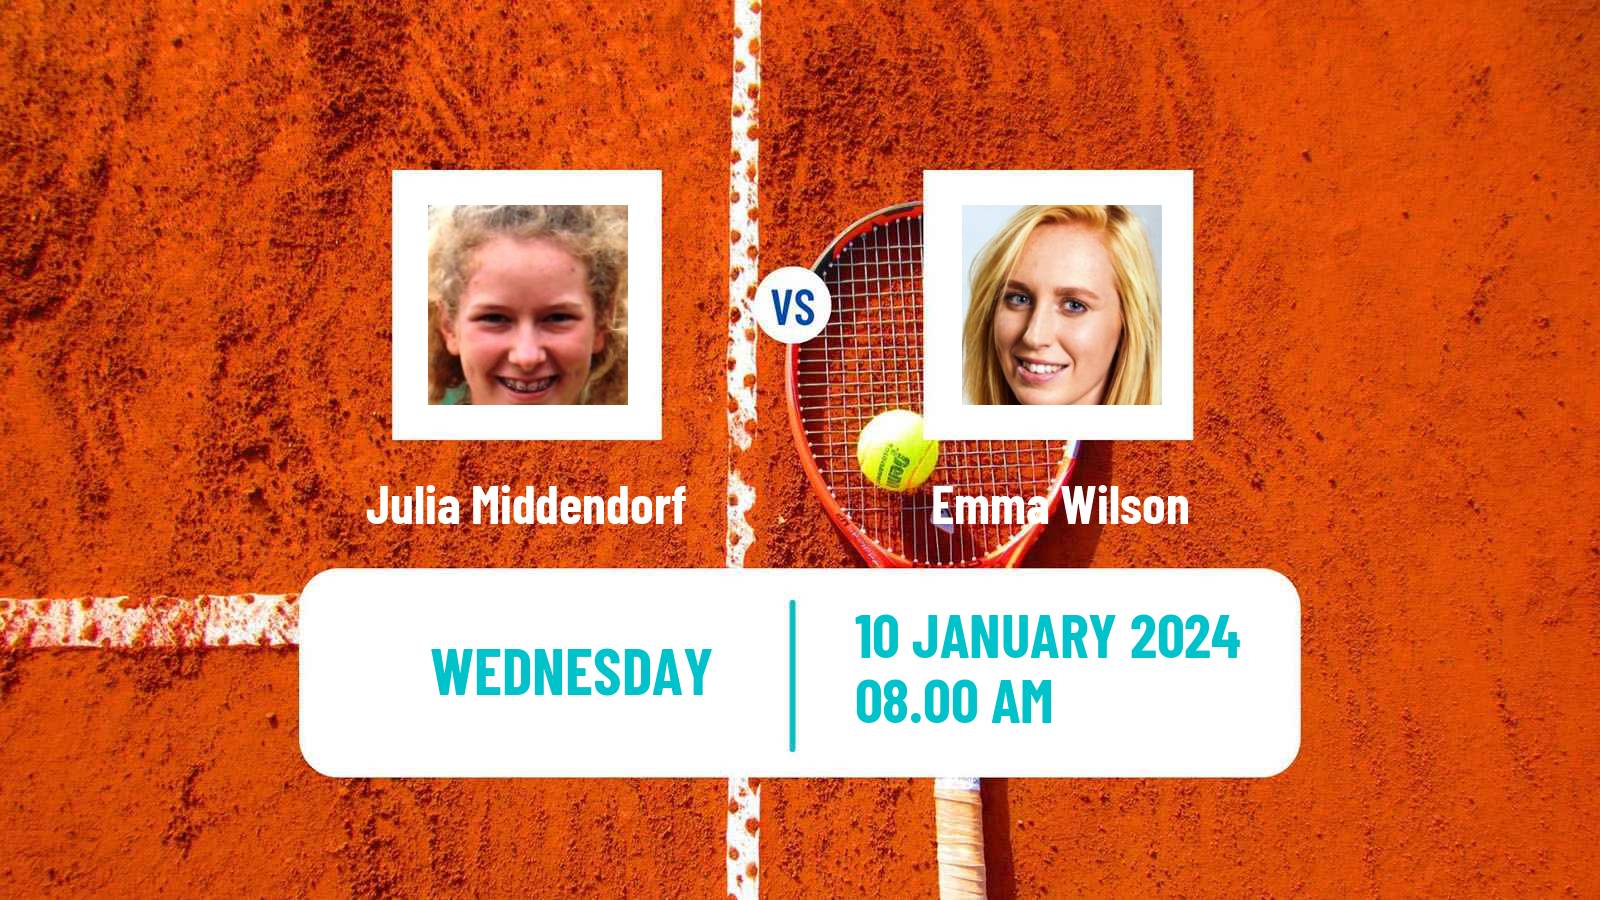 Tennis ITF W35 Loughborough Women Julia Middendorf - Emma Wilson